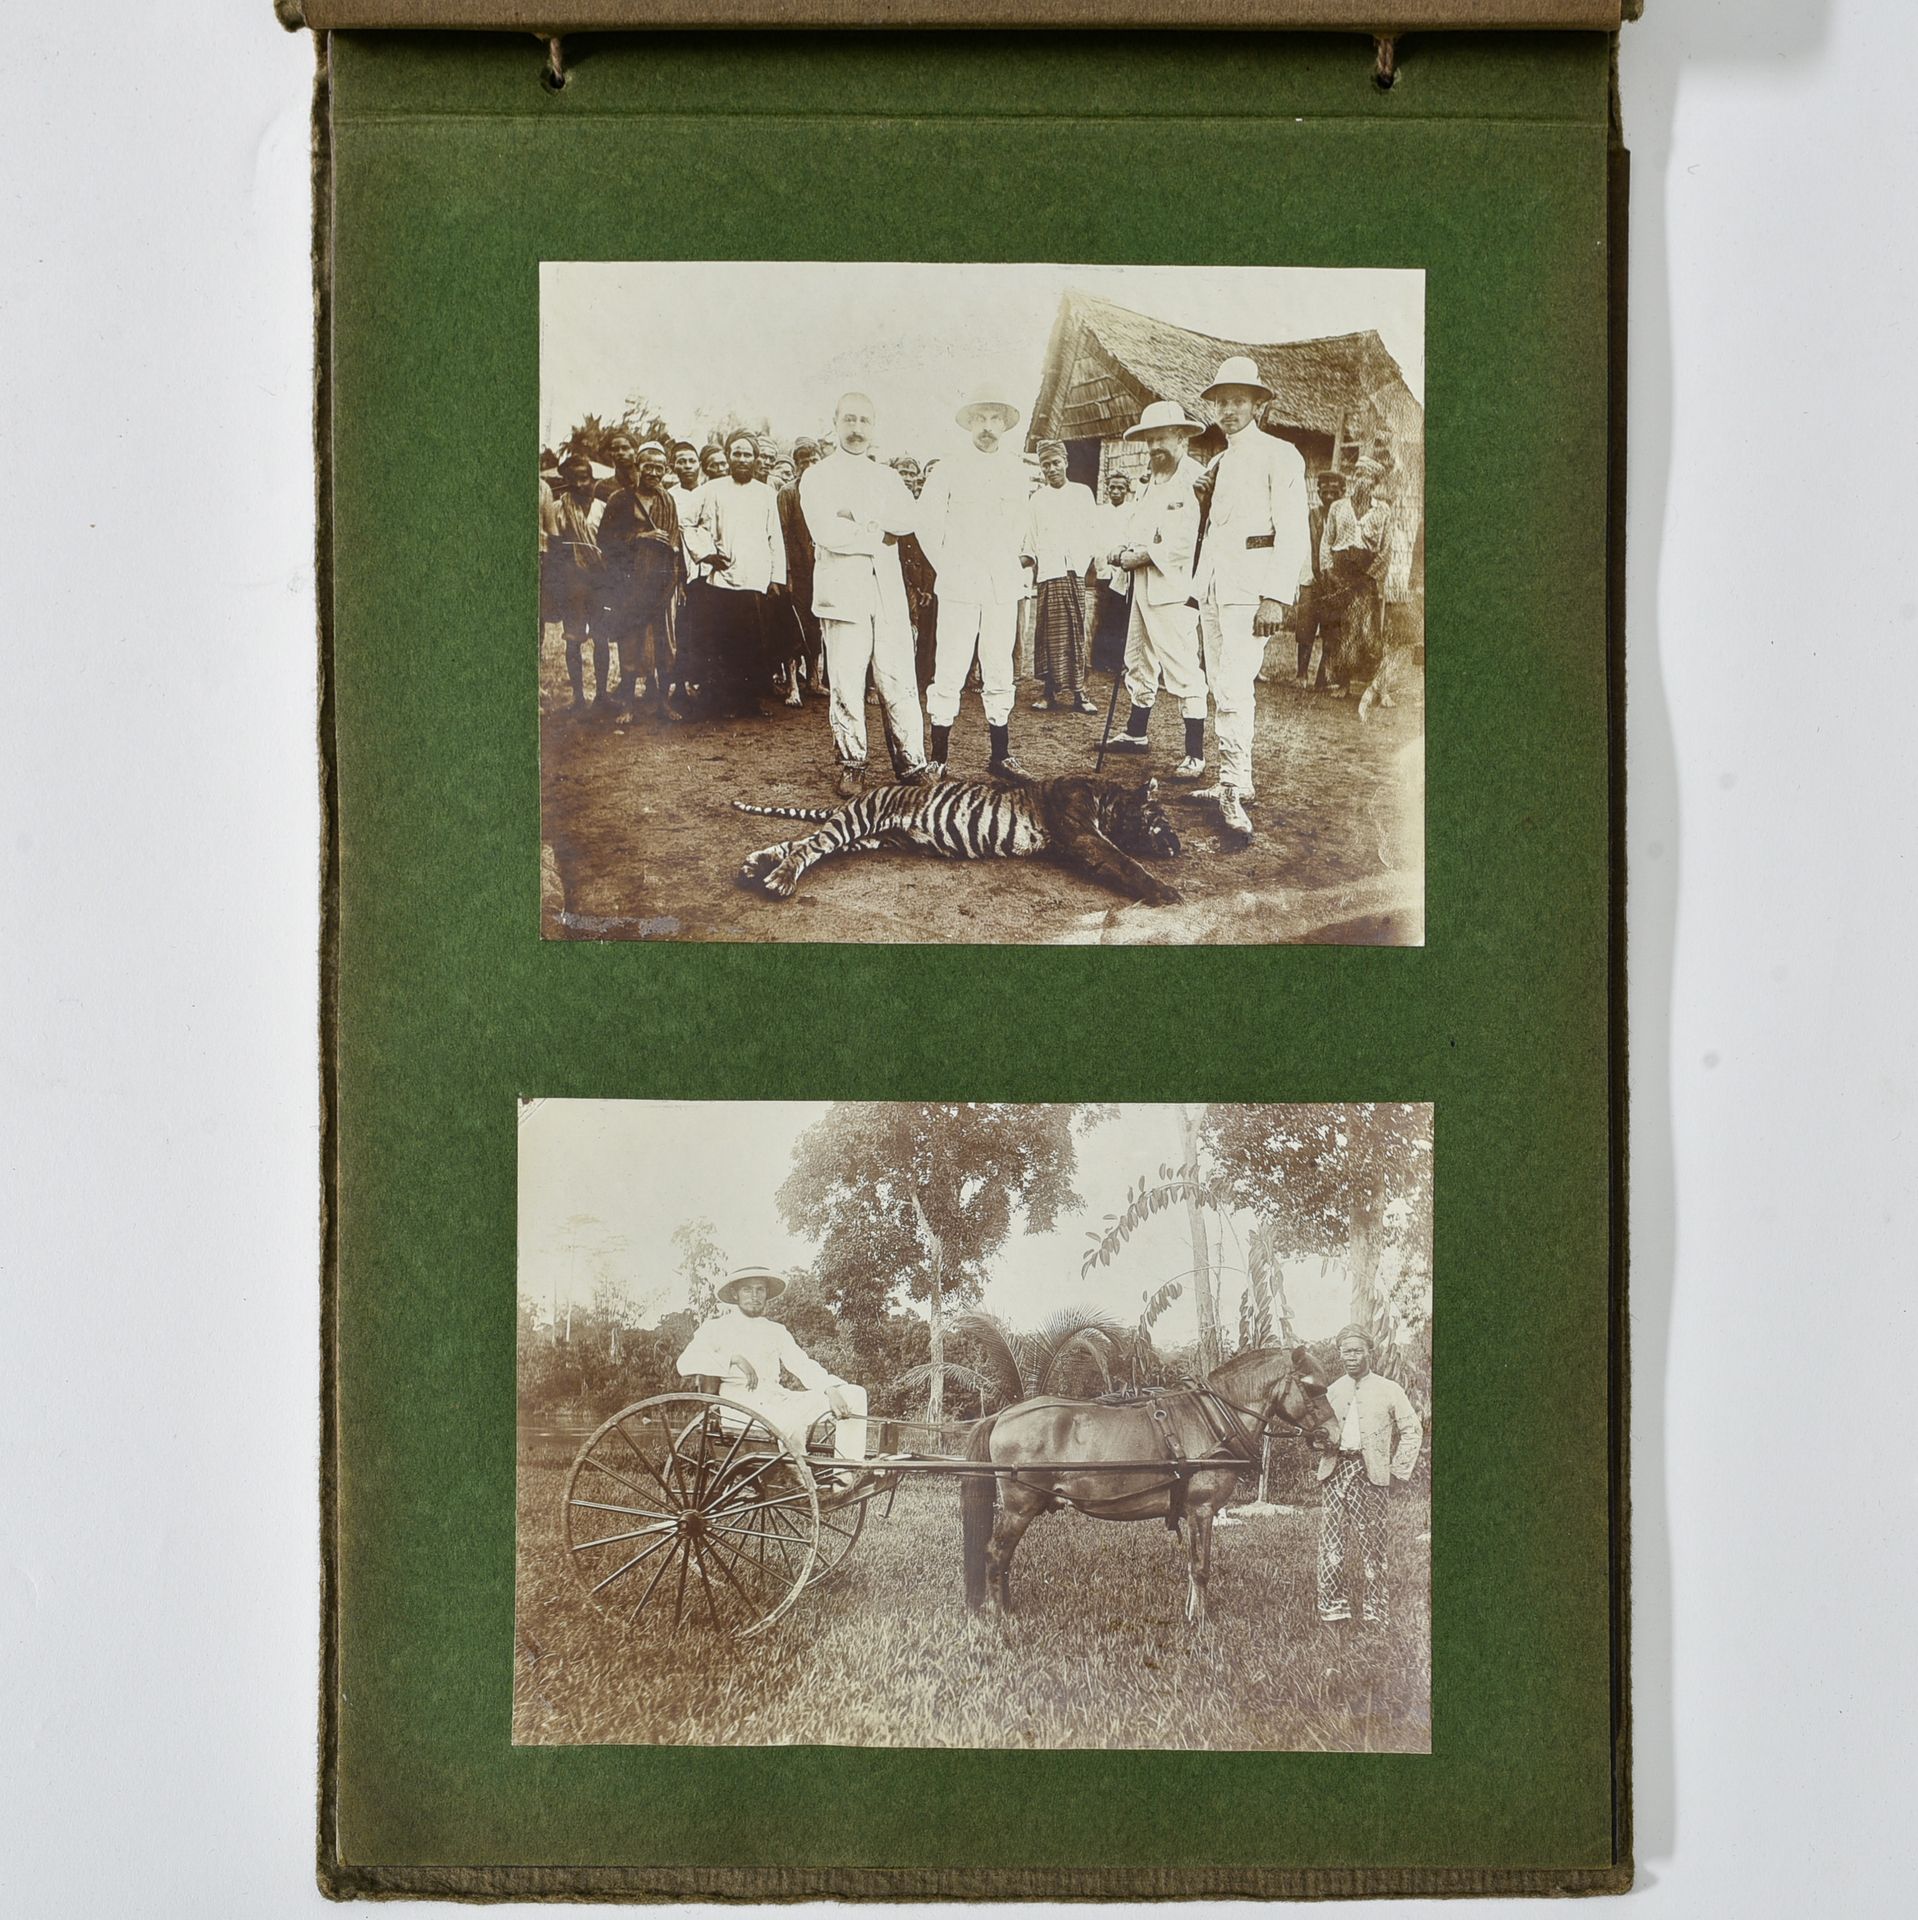 Album de photographies anciennes INDONESIA E BELGIO INTORNO AL 1900

Album di ve&hellip;